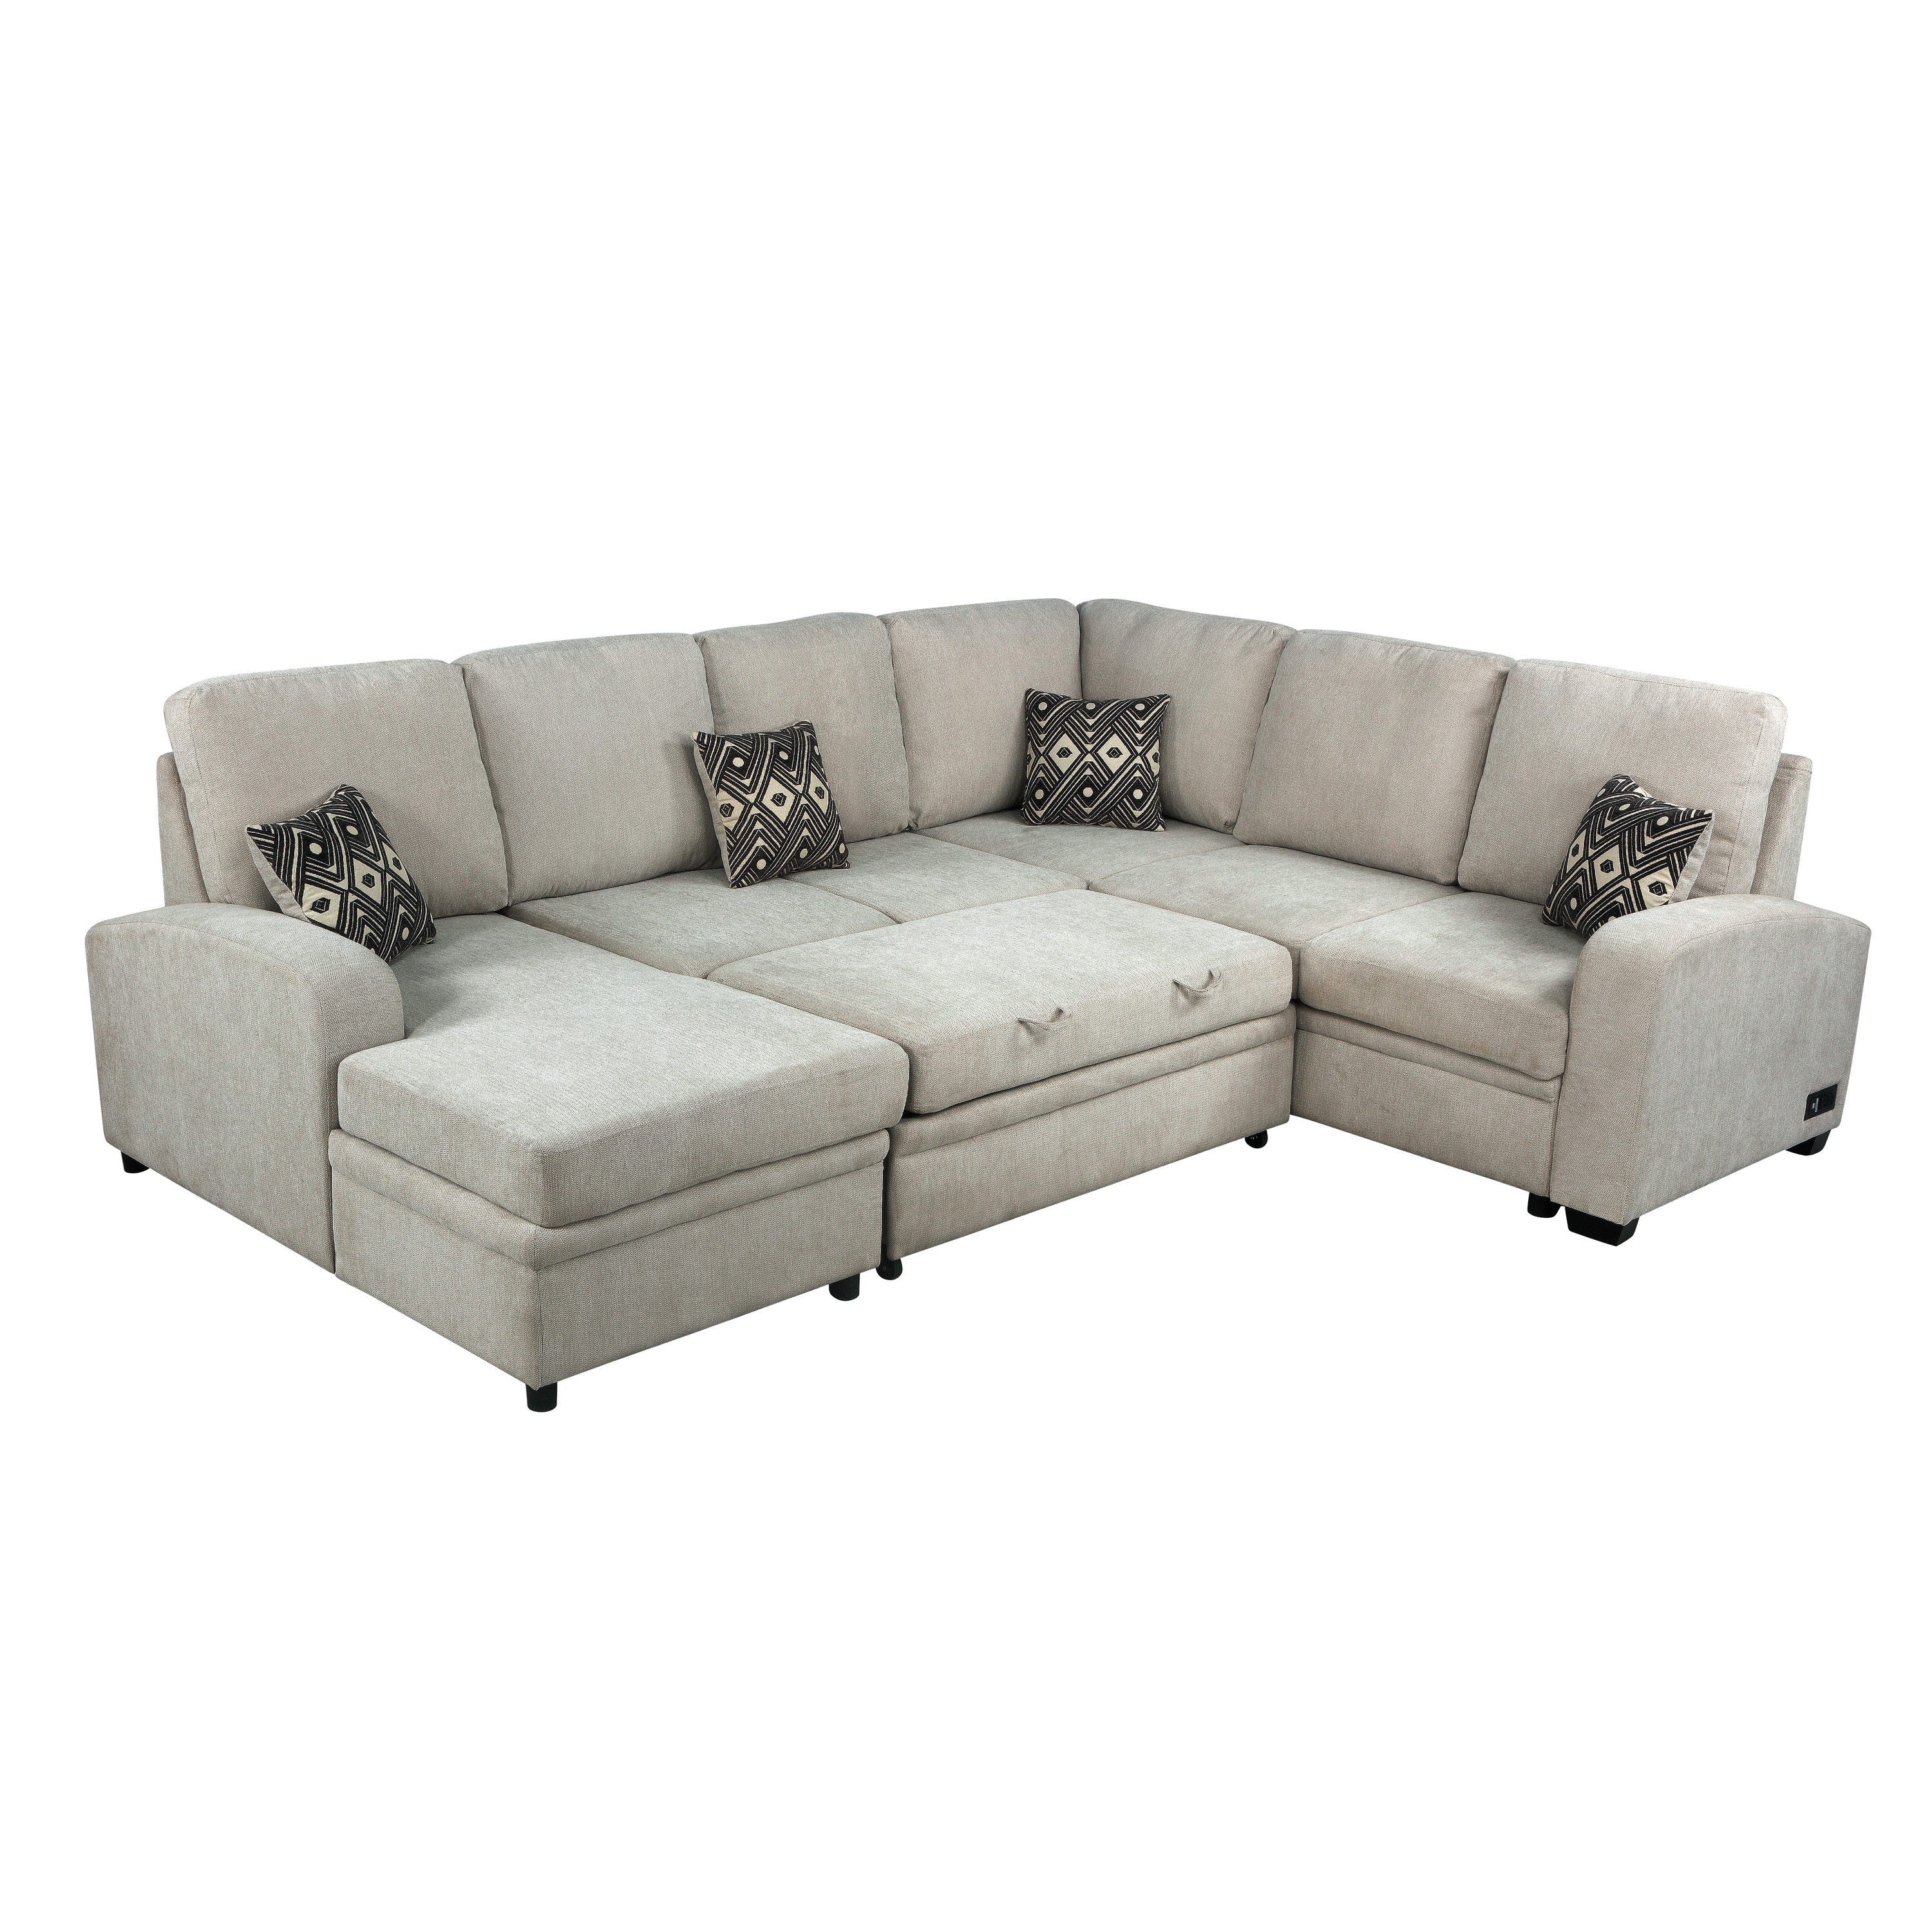 Serta Blair Multifunctional Indoor Sectional Sofa with USB & Power, Beige - image 4 of 11